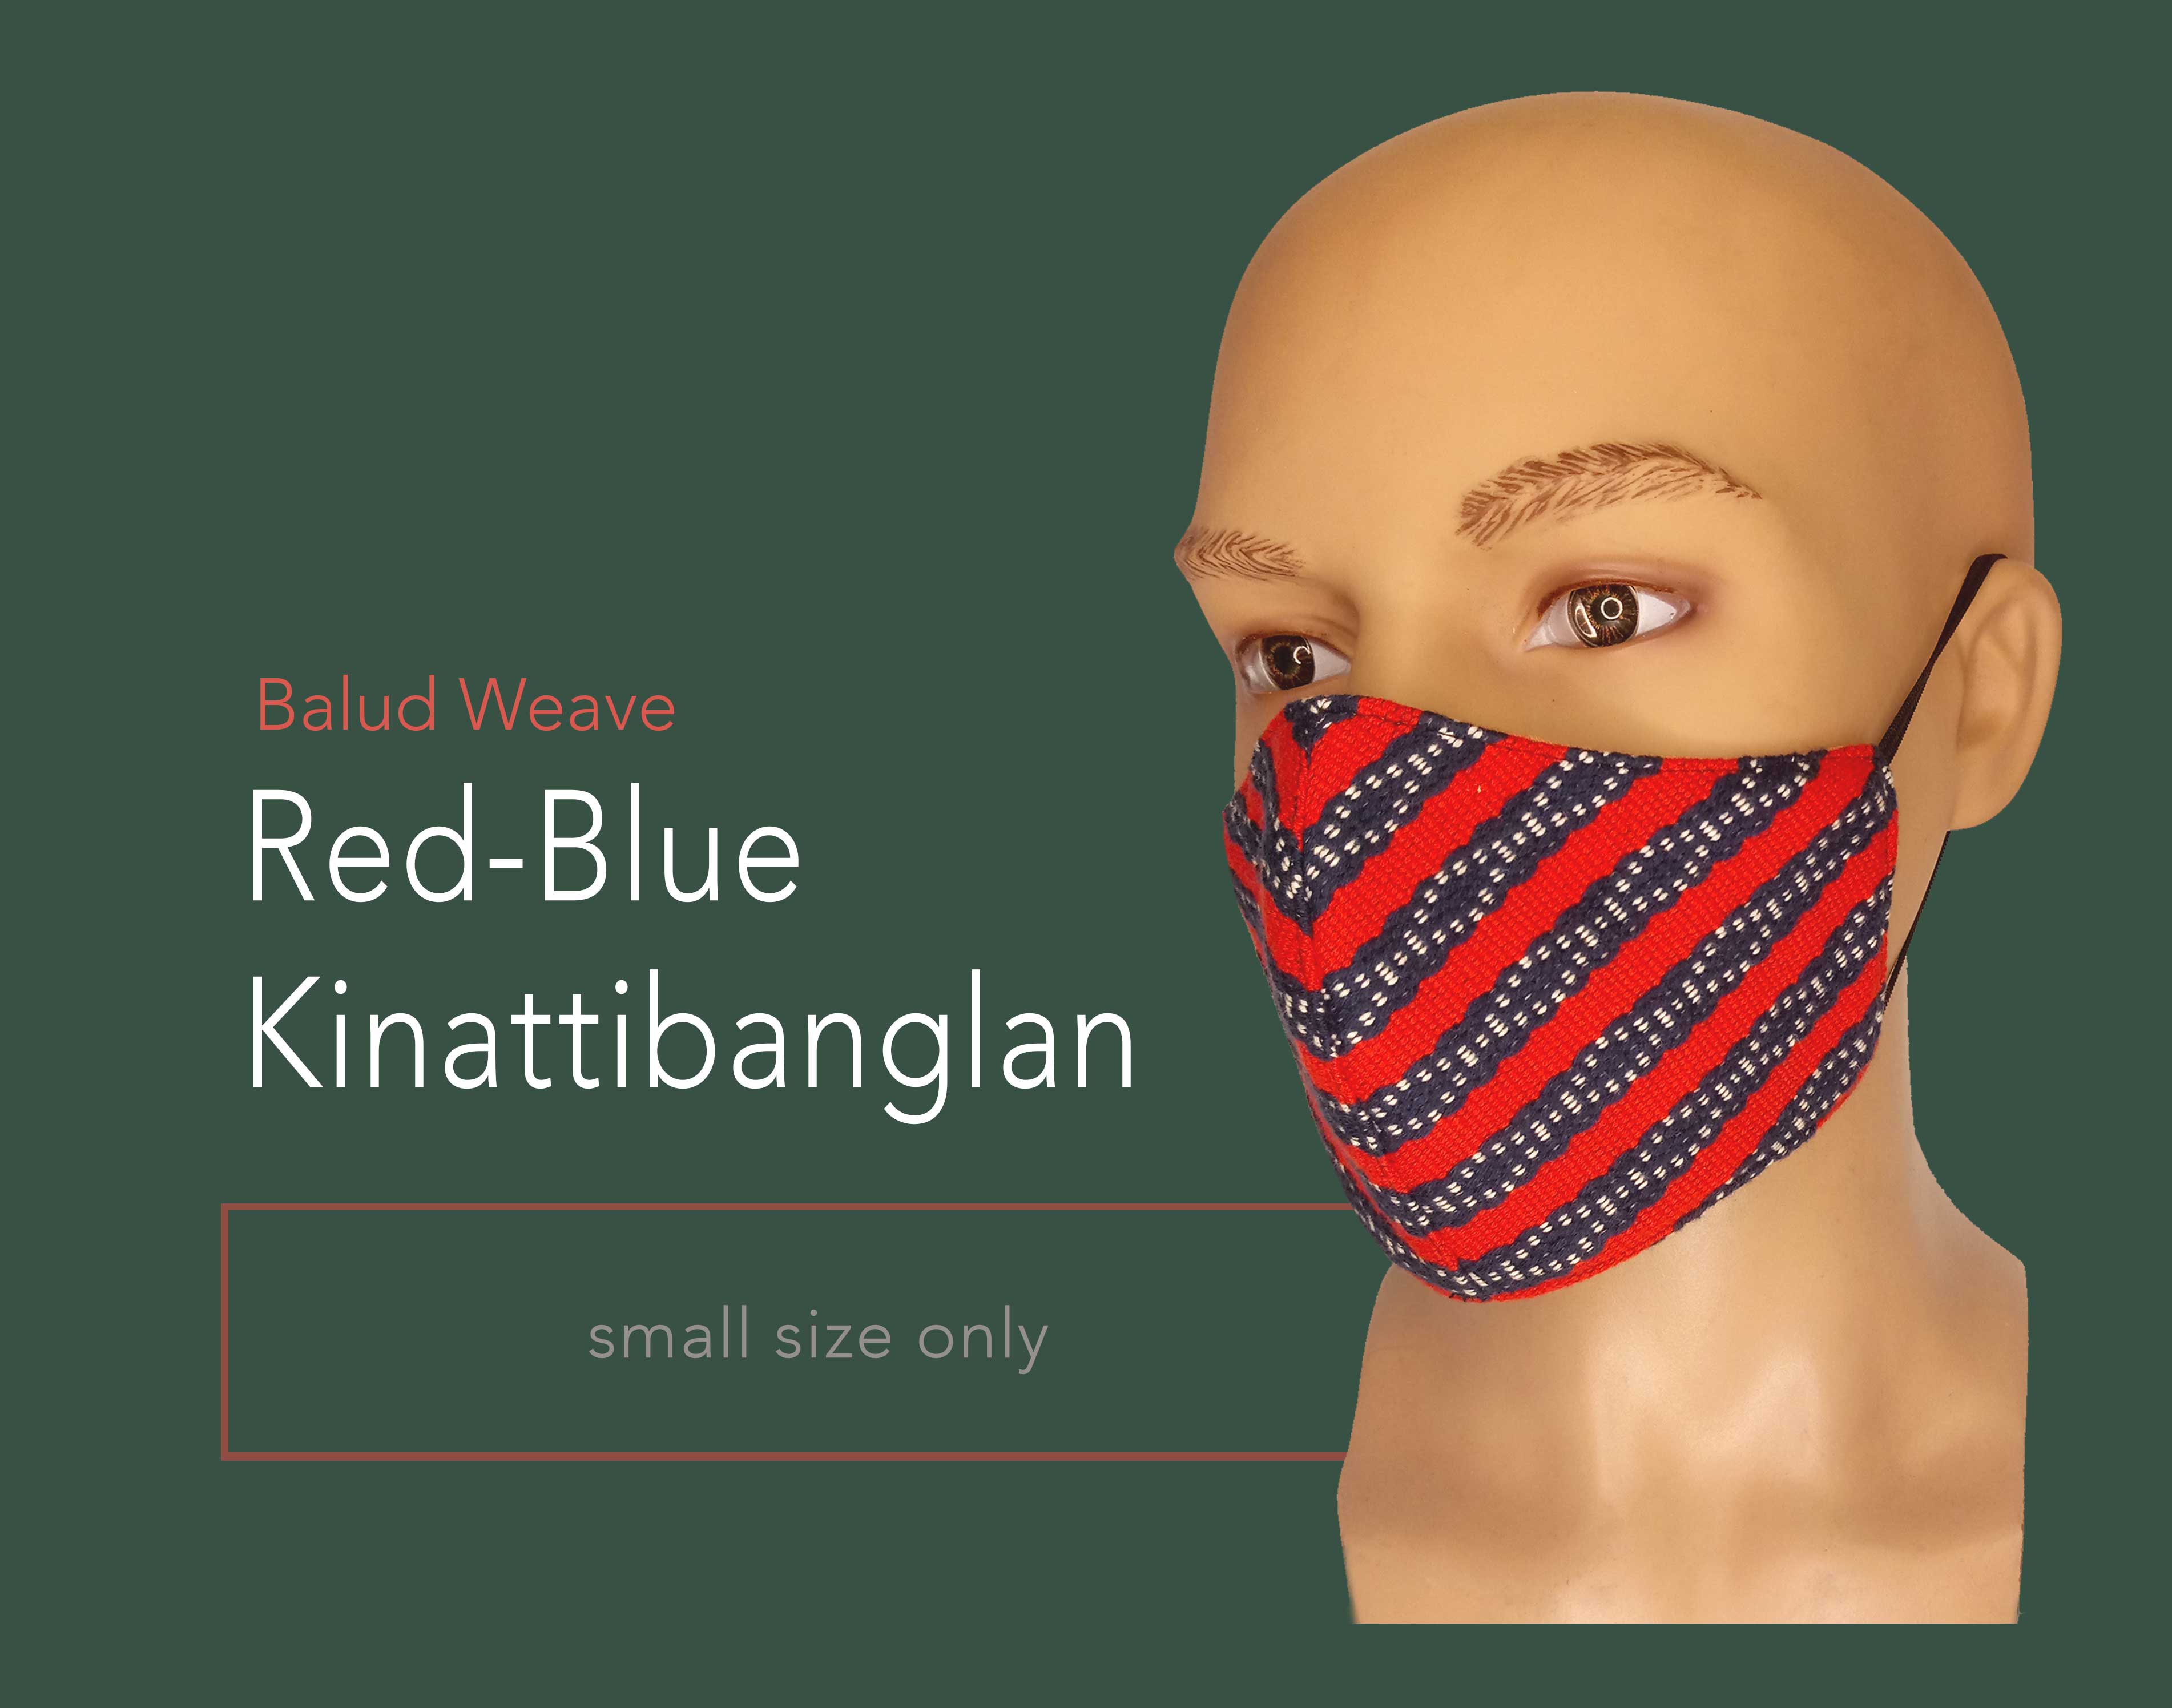 Red-Blue Kinattibanglan